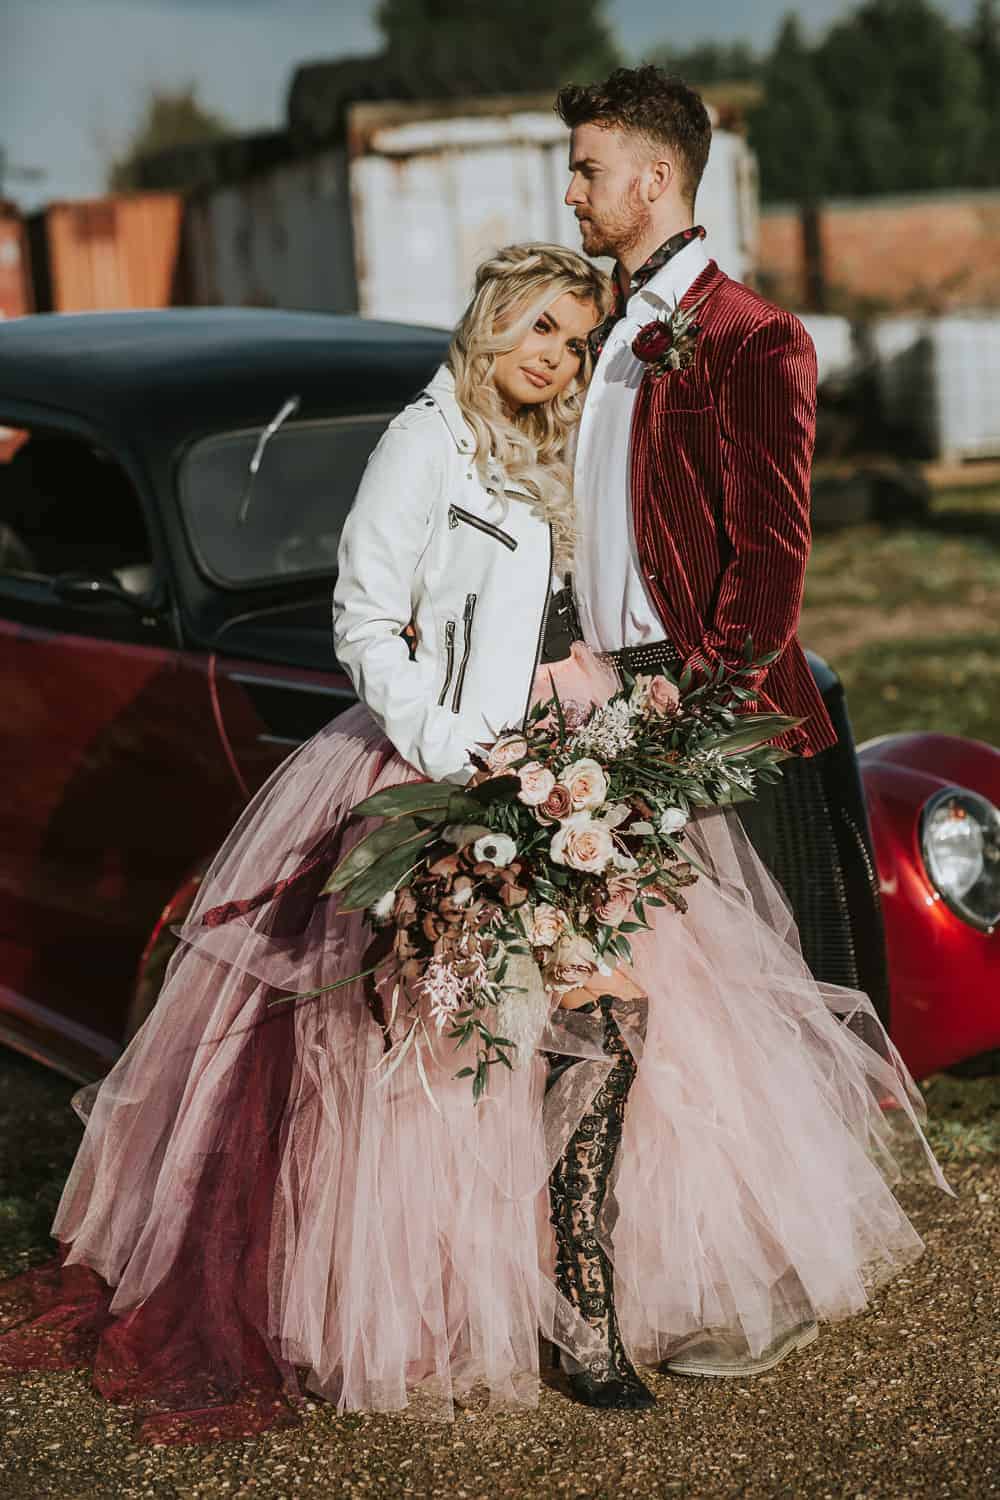 ROMANTIC MOODY ROCK AND ROLL WEDDING INSPIRATION DIY BARN WEDDING VENUE IN NOTTINGHAMSHIRE BURGUNDY COLOUR THEME UNIQUE HOT ROD WEDDING CAR 